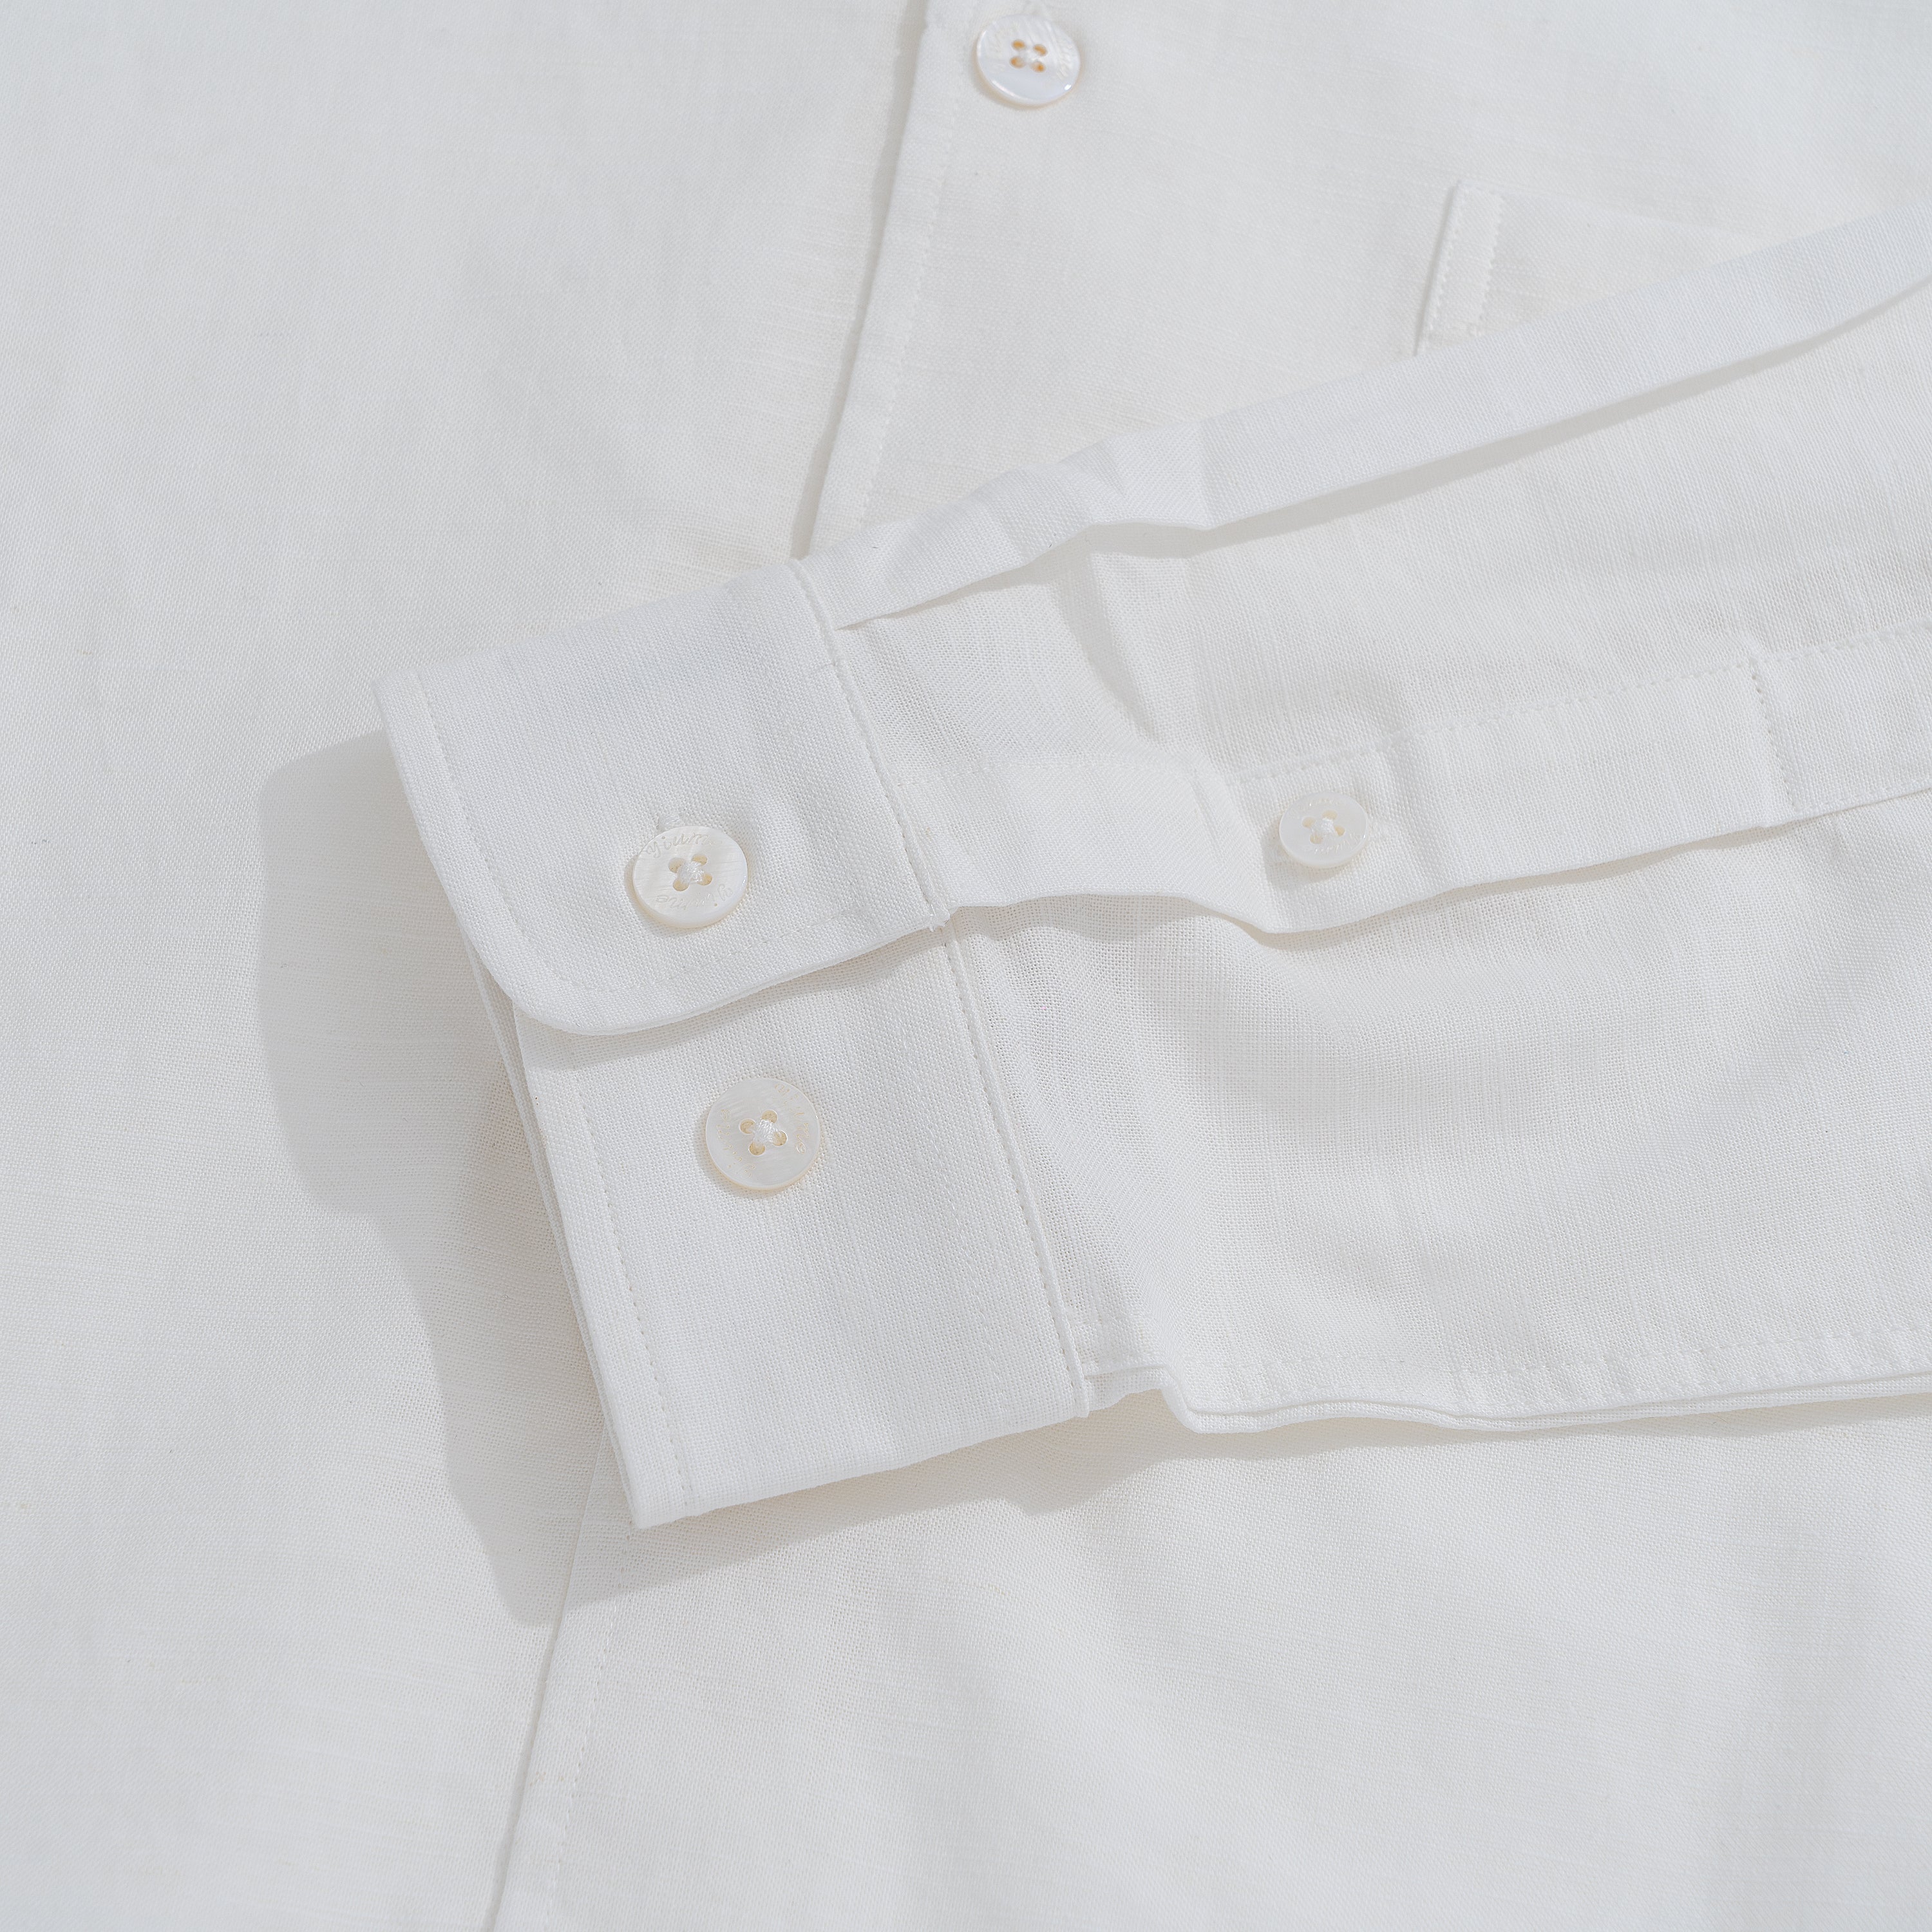 Hawaiian Shirt For Men Riviera Holiday Pointed Collar Long Sleeve Shirt - White